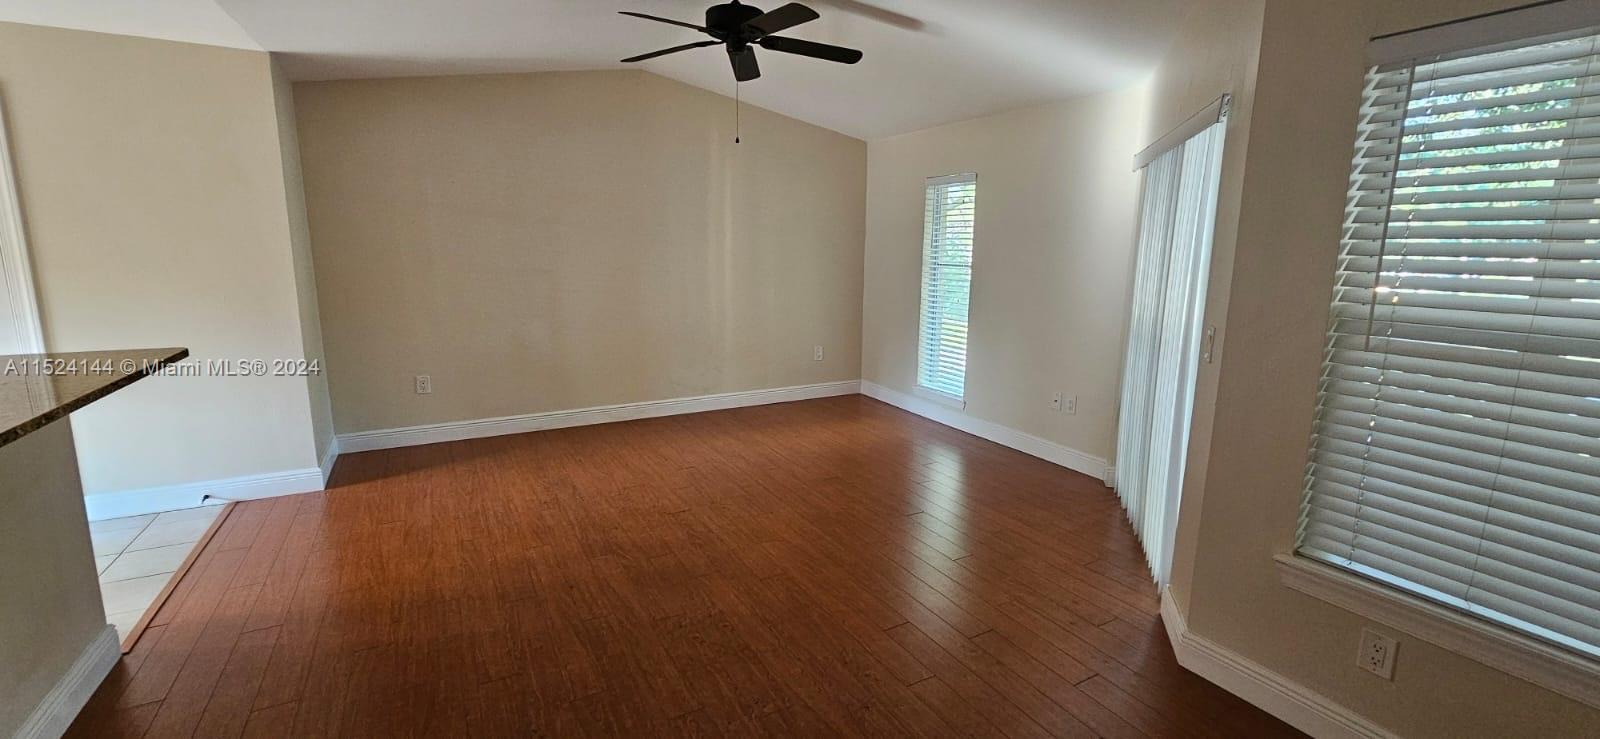 Rental Property at 4847 Via Palm Lks 1015, West Palm Beach, Palm Beach County, Florida - Bedrooms: 1 
Bathrooms: 1  - $1,700 MO.